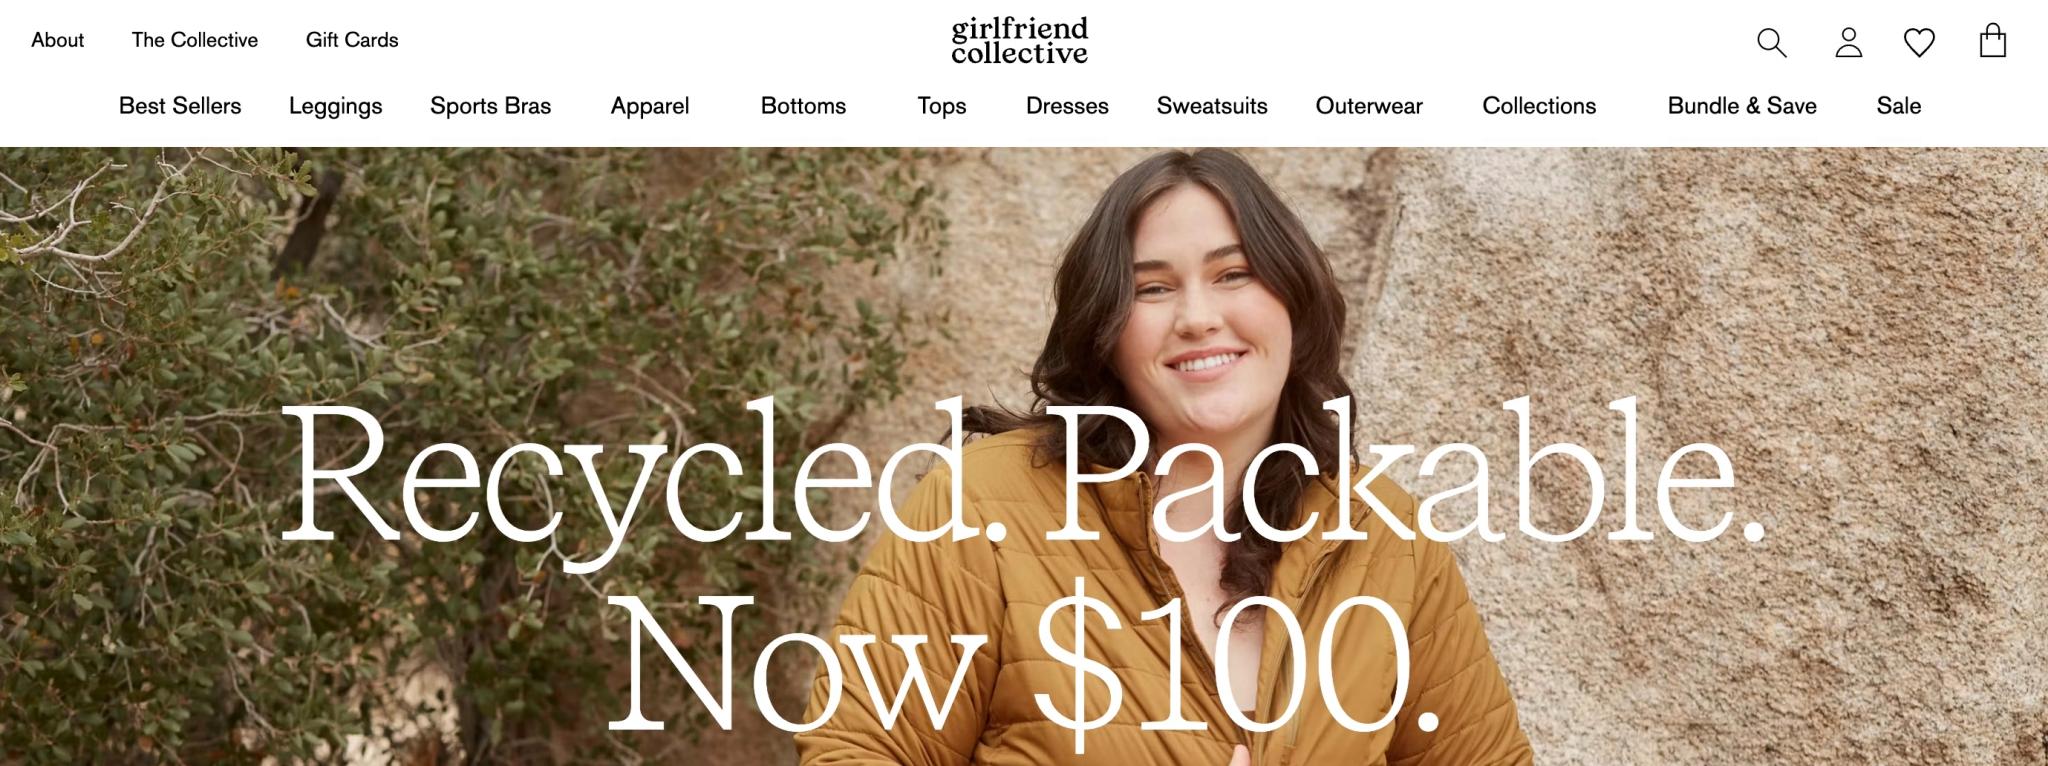 screenshot of Girlfriend Collective website